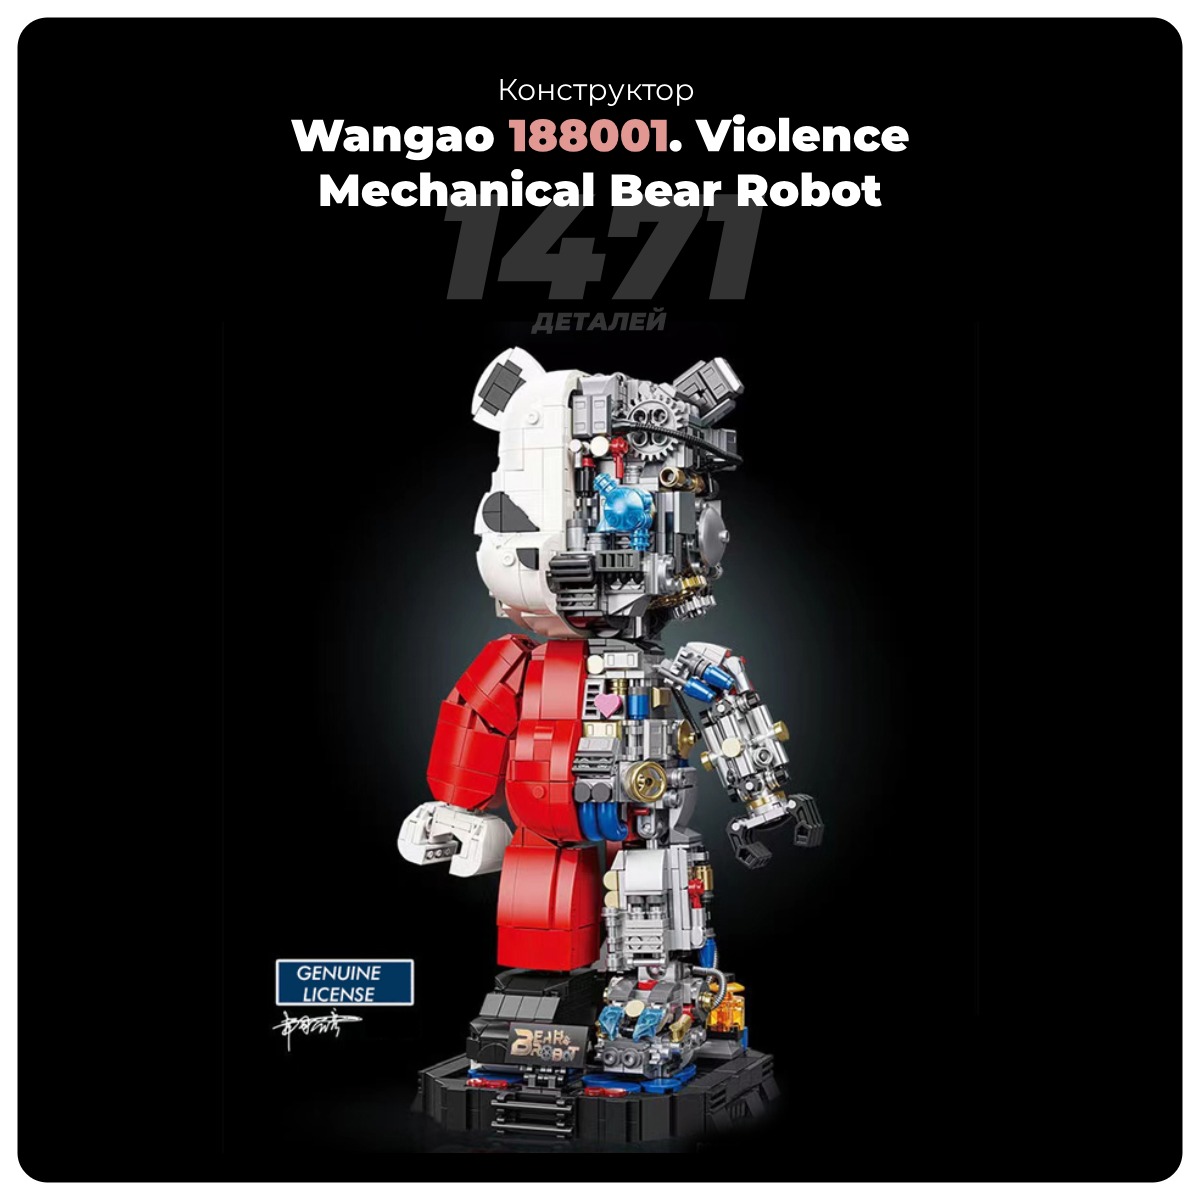 Wangao-188001-Violence-Mechanical-Bear-Robot-01